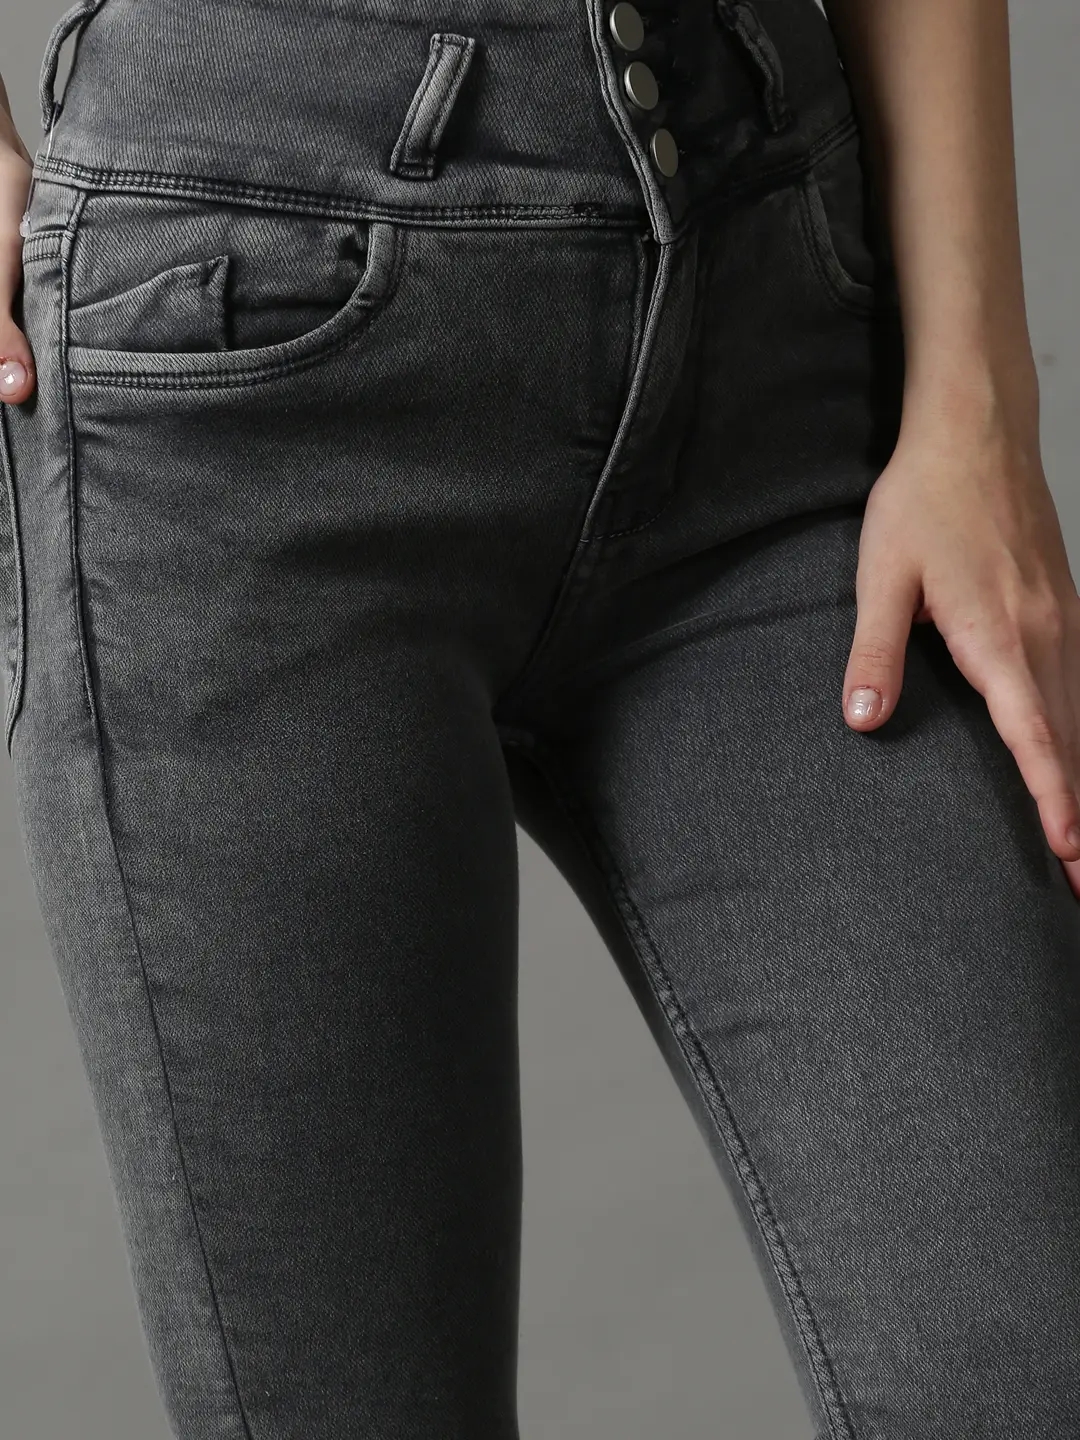 Showoff | SHOWOFF Women Grey Solid  Skinny Fit Jeans 6